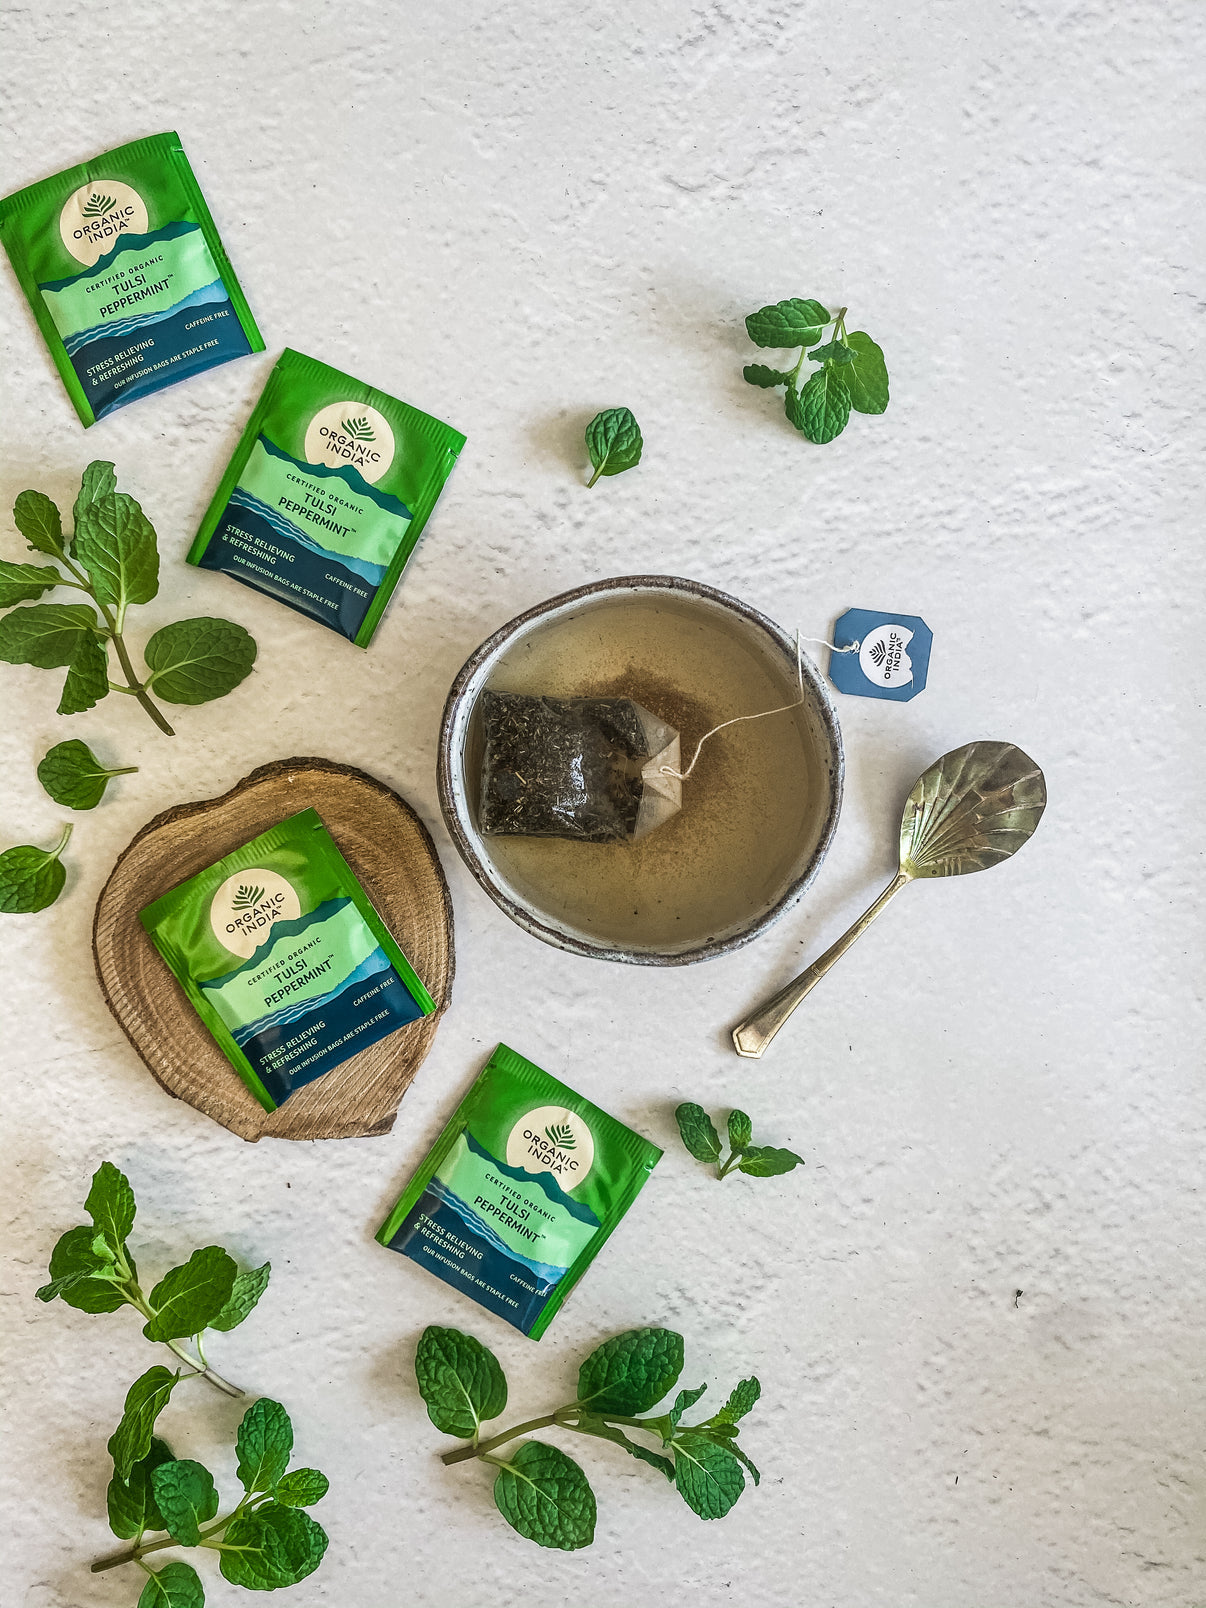 Organic India Wellness Tea Tulsi Peppermint, 25 Herbal Tea Bags; Certified Organic